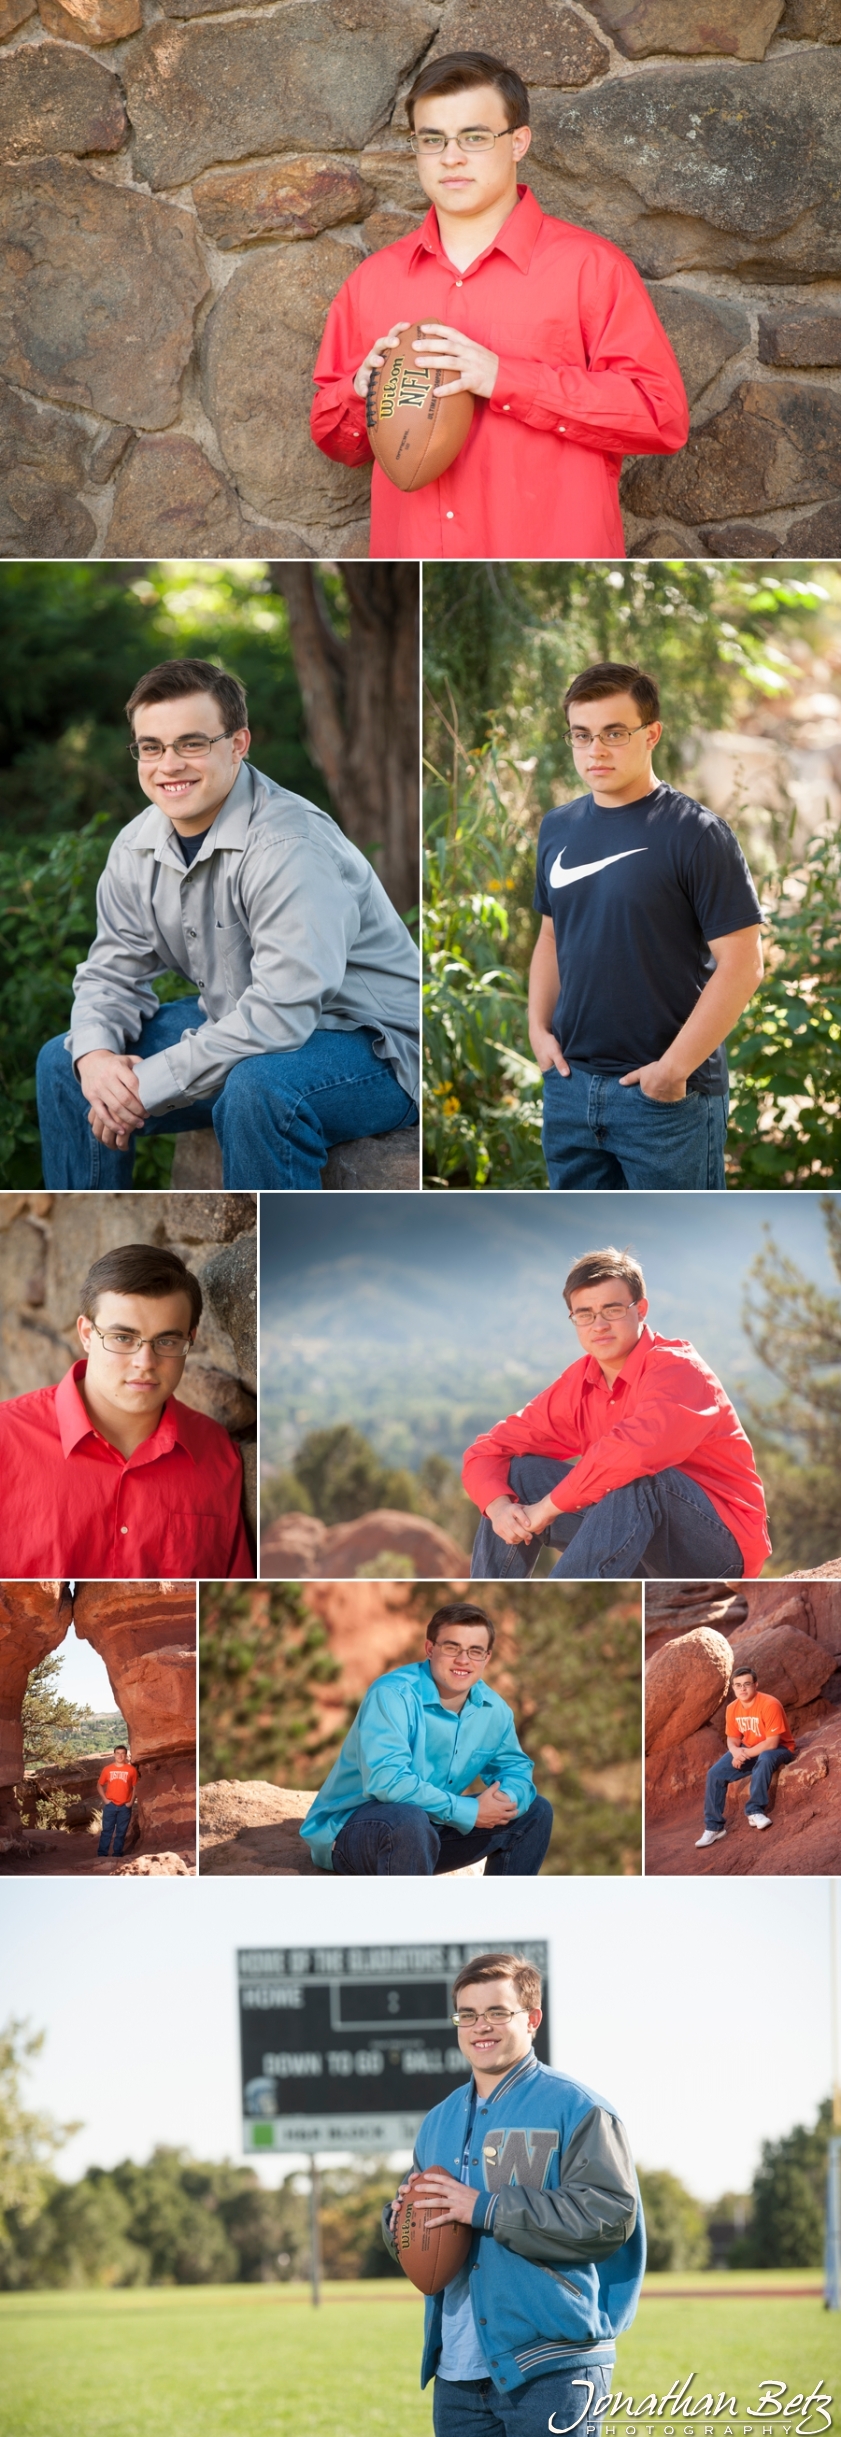 Colorado Springs High School Senior Pictures_Jonathan Betz Photography